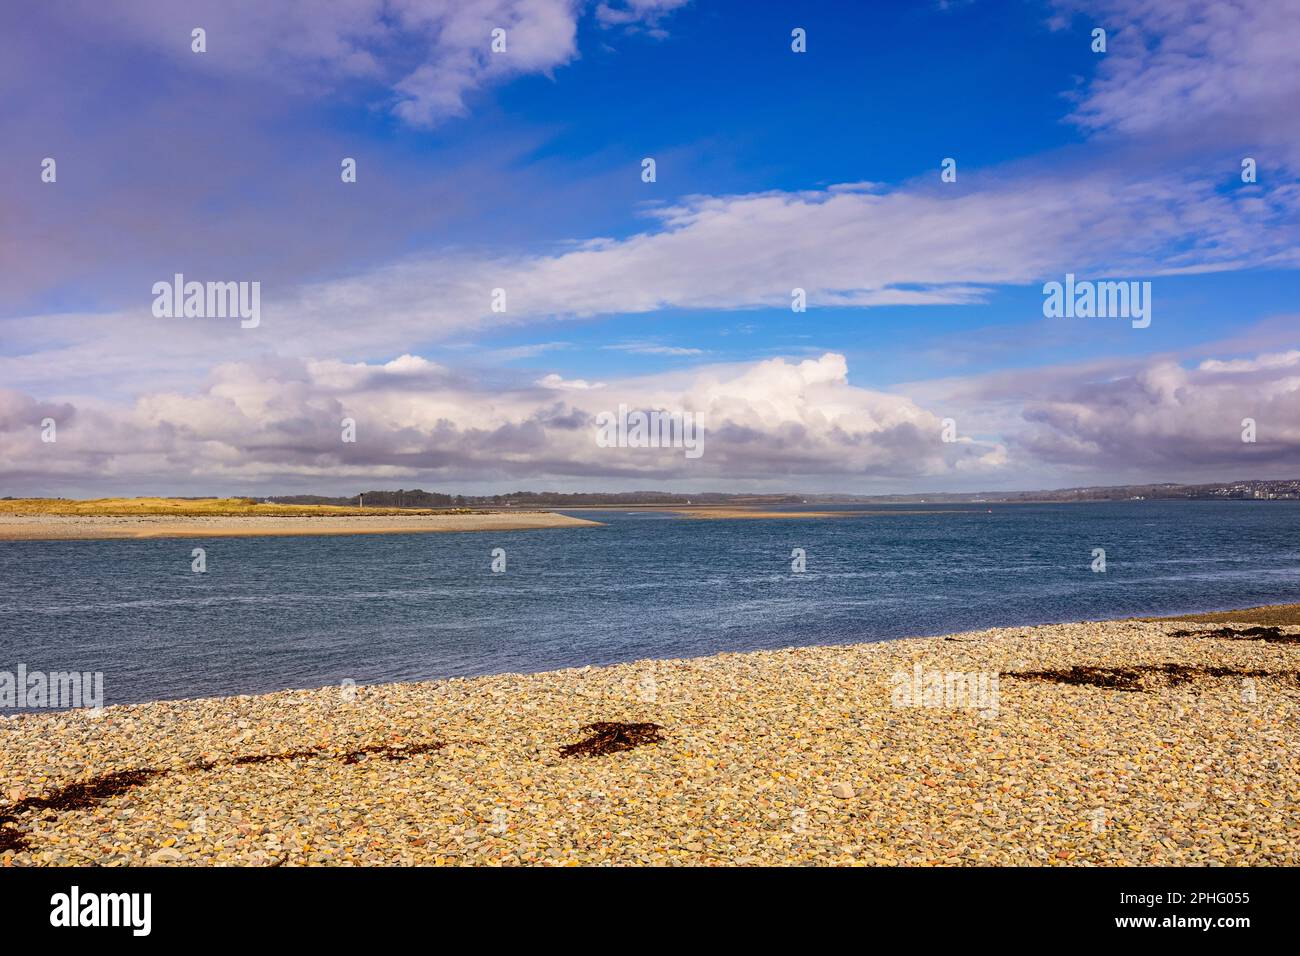 View from beach on mainland to Abermenai Point on Anglesey across the Menai Strait. Dinas Dinlle, Caernarfon, Gwynedd, north Wales, UK, Britain Stock Photo